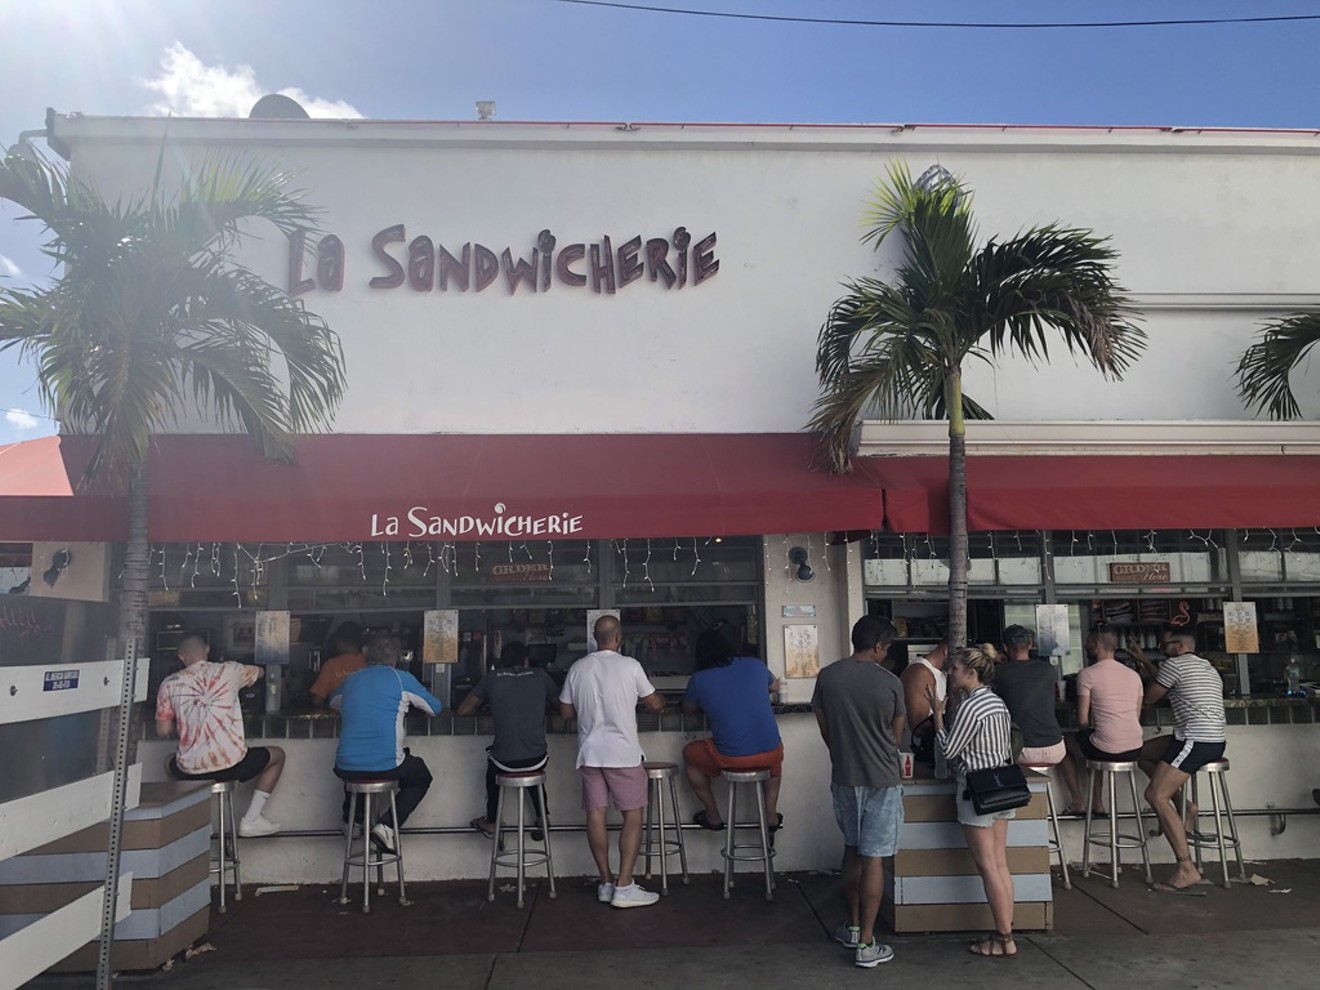 Customers sneak in a bite at La Sandwicherie amid the coronavirus crisis.